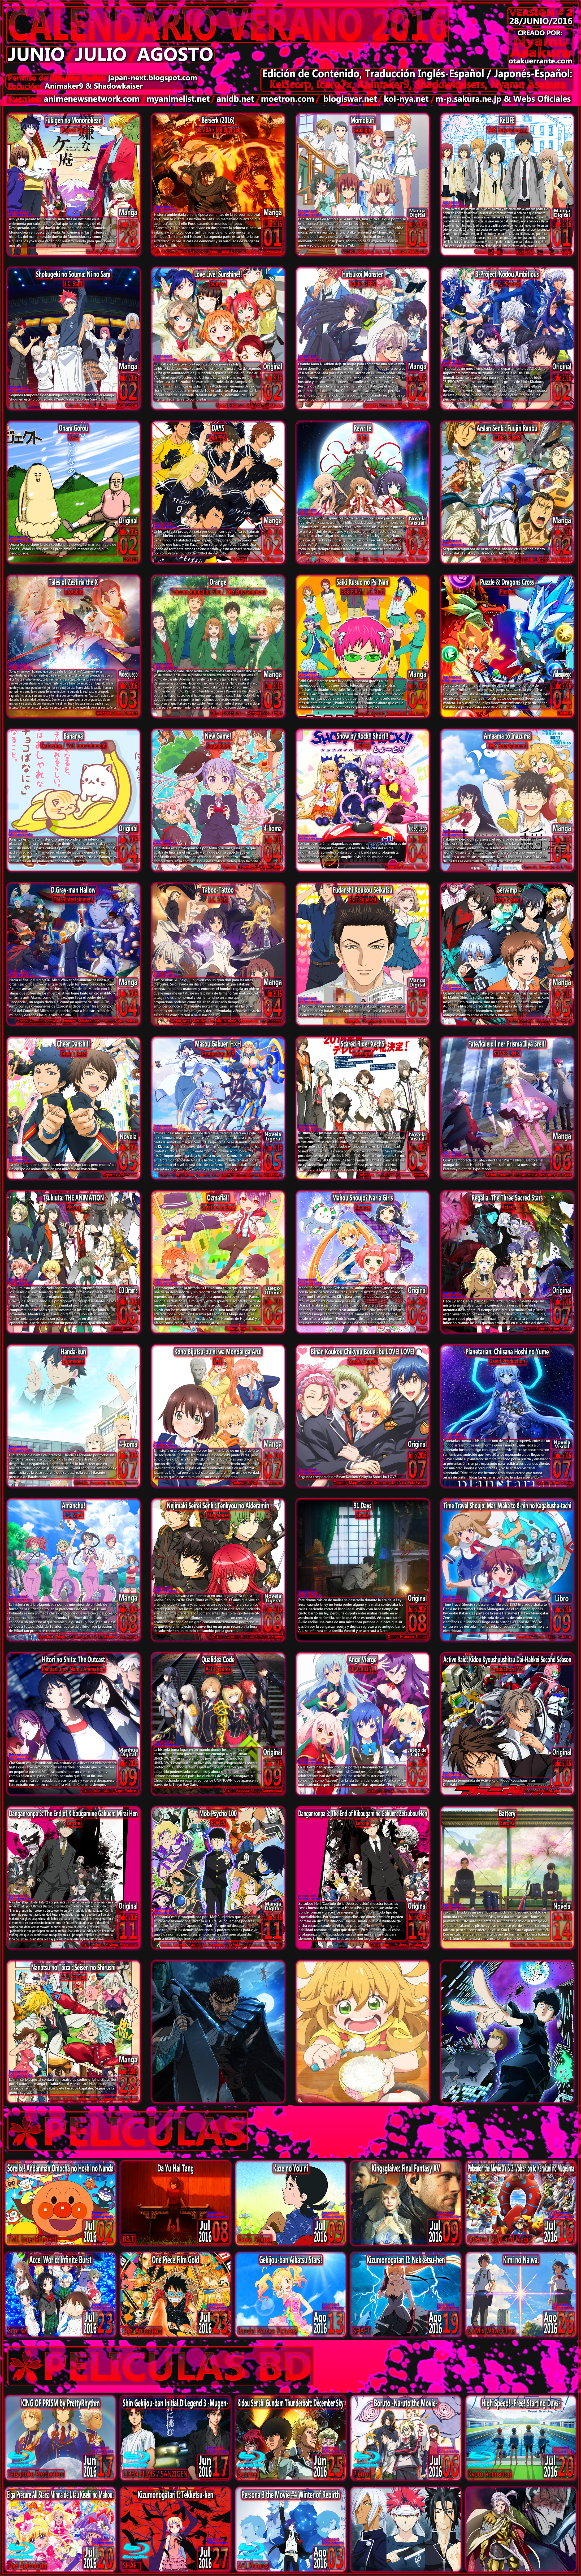 Calendario Anime Temporada Verano 2016 - JapanNext